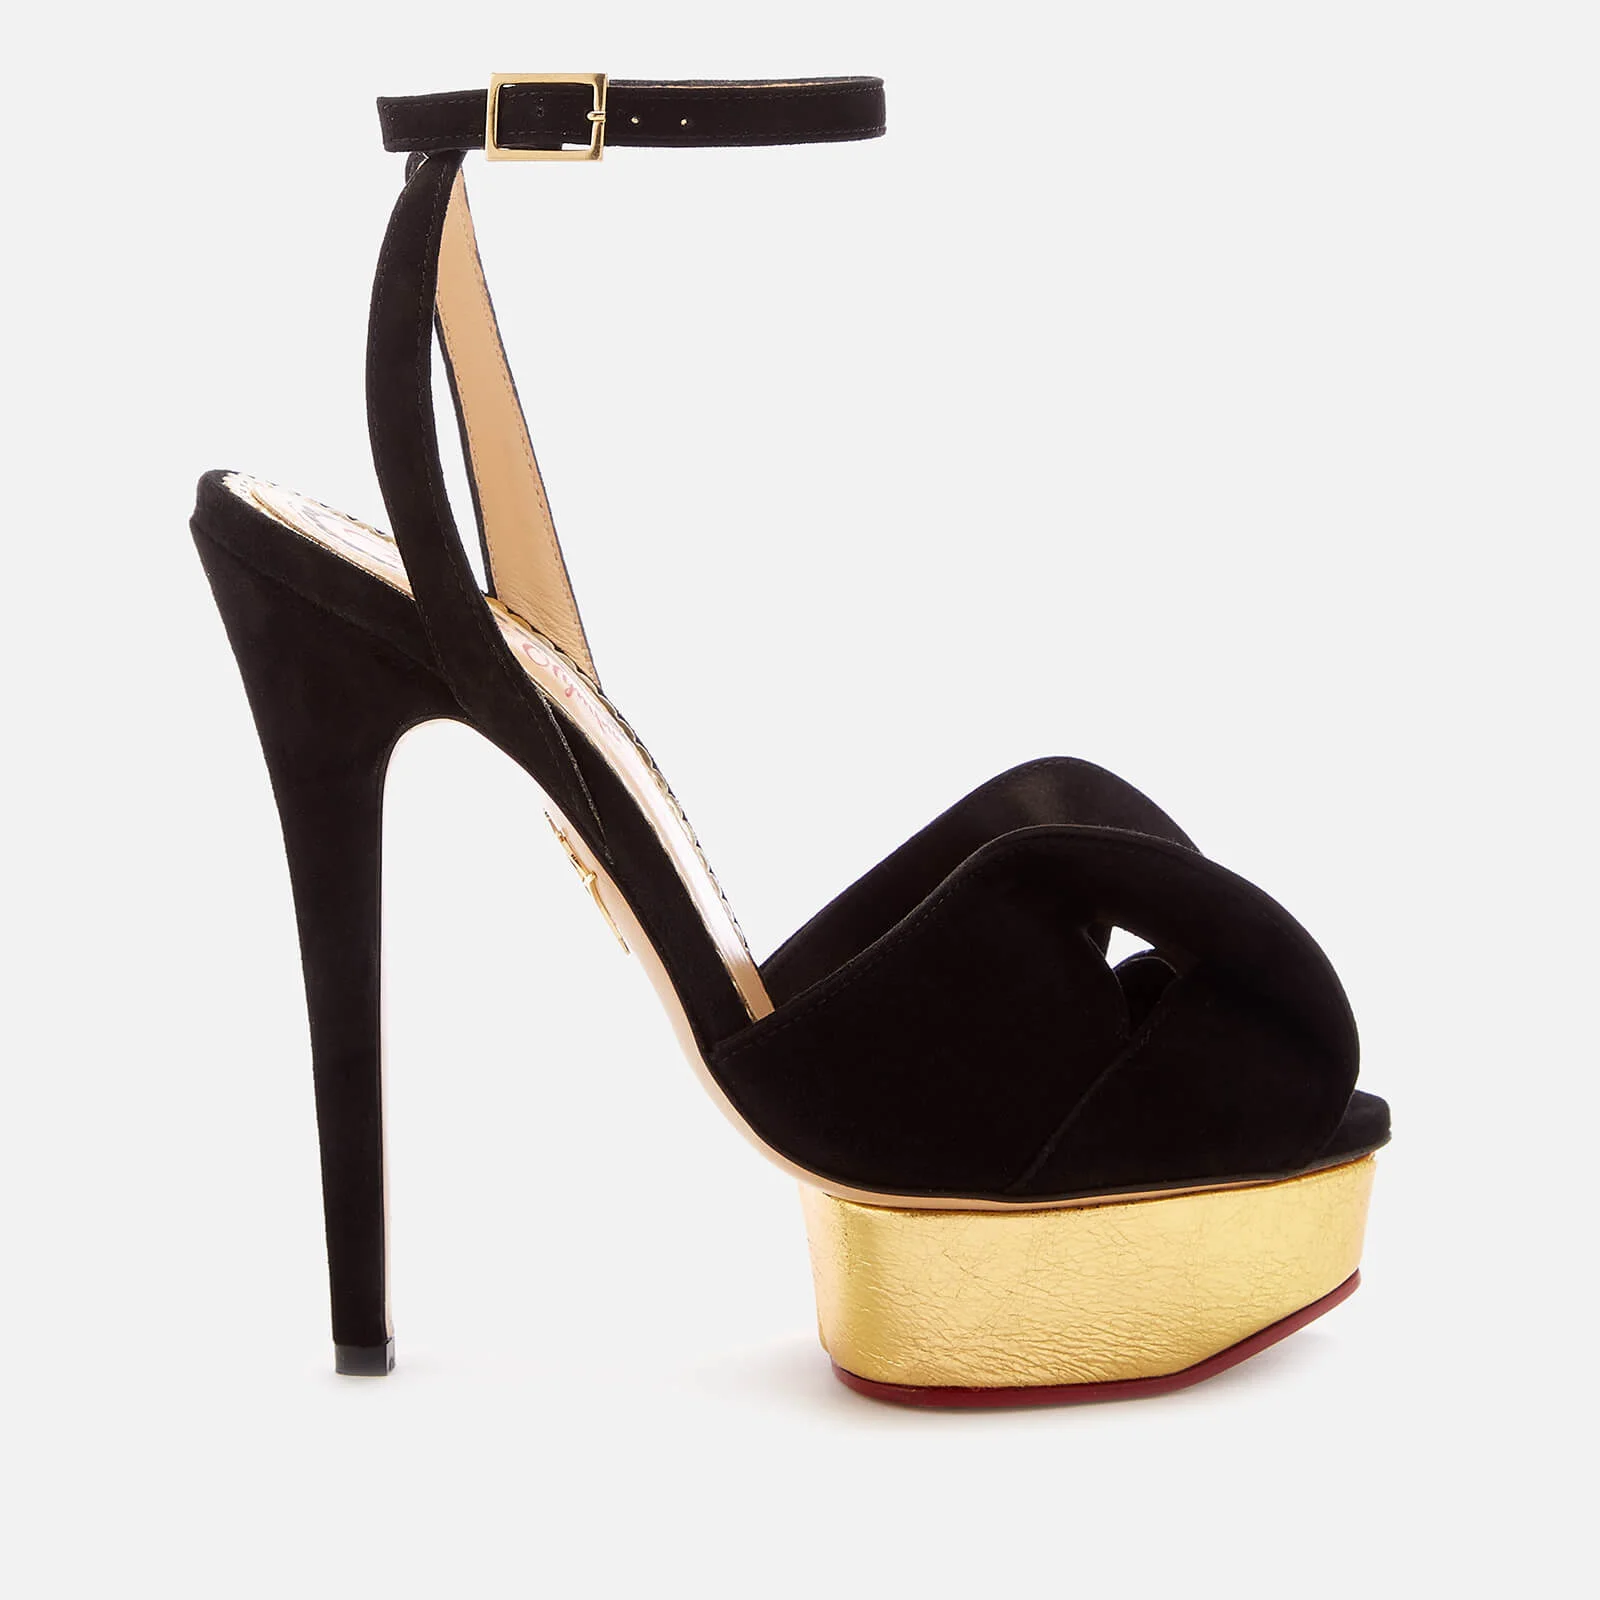 Charlotte Olympia Women's Satin and Metallic Platform Sandals - Black/Gold Image 1